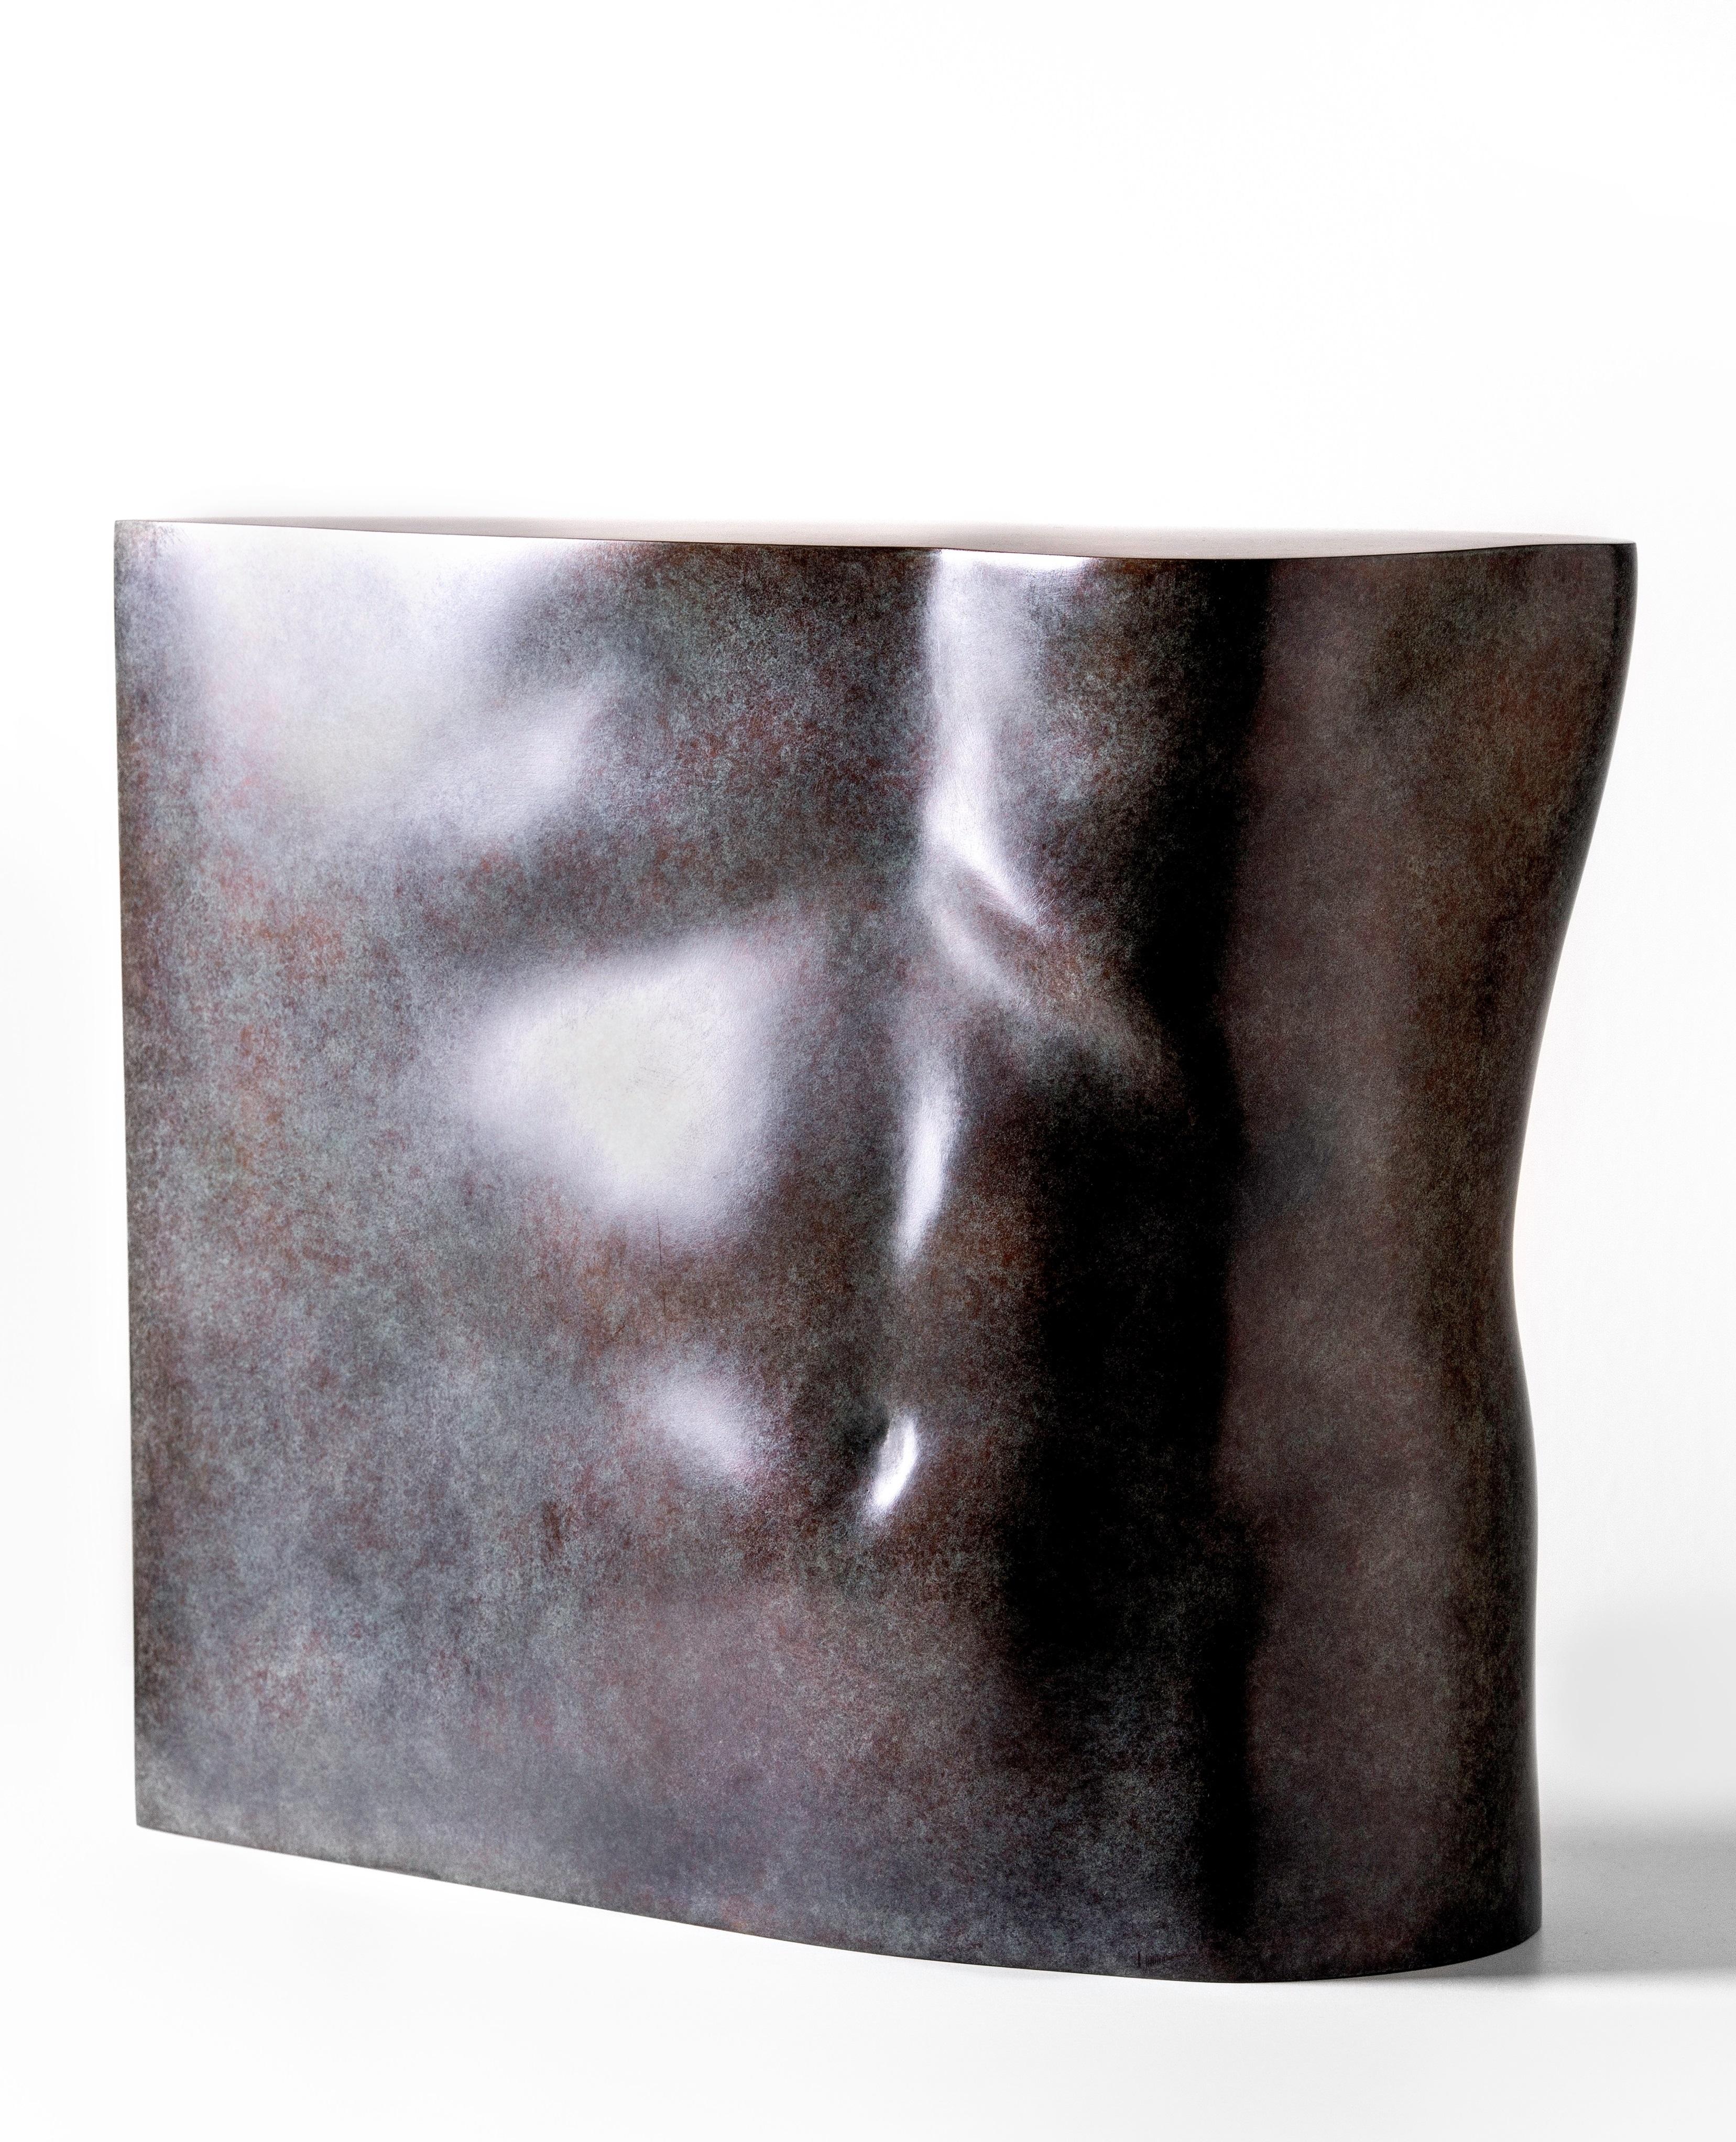 KOBE Nude Sculpture – Torso Maschile Bronze Skulptur Fackel männlicher Akt Torso 